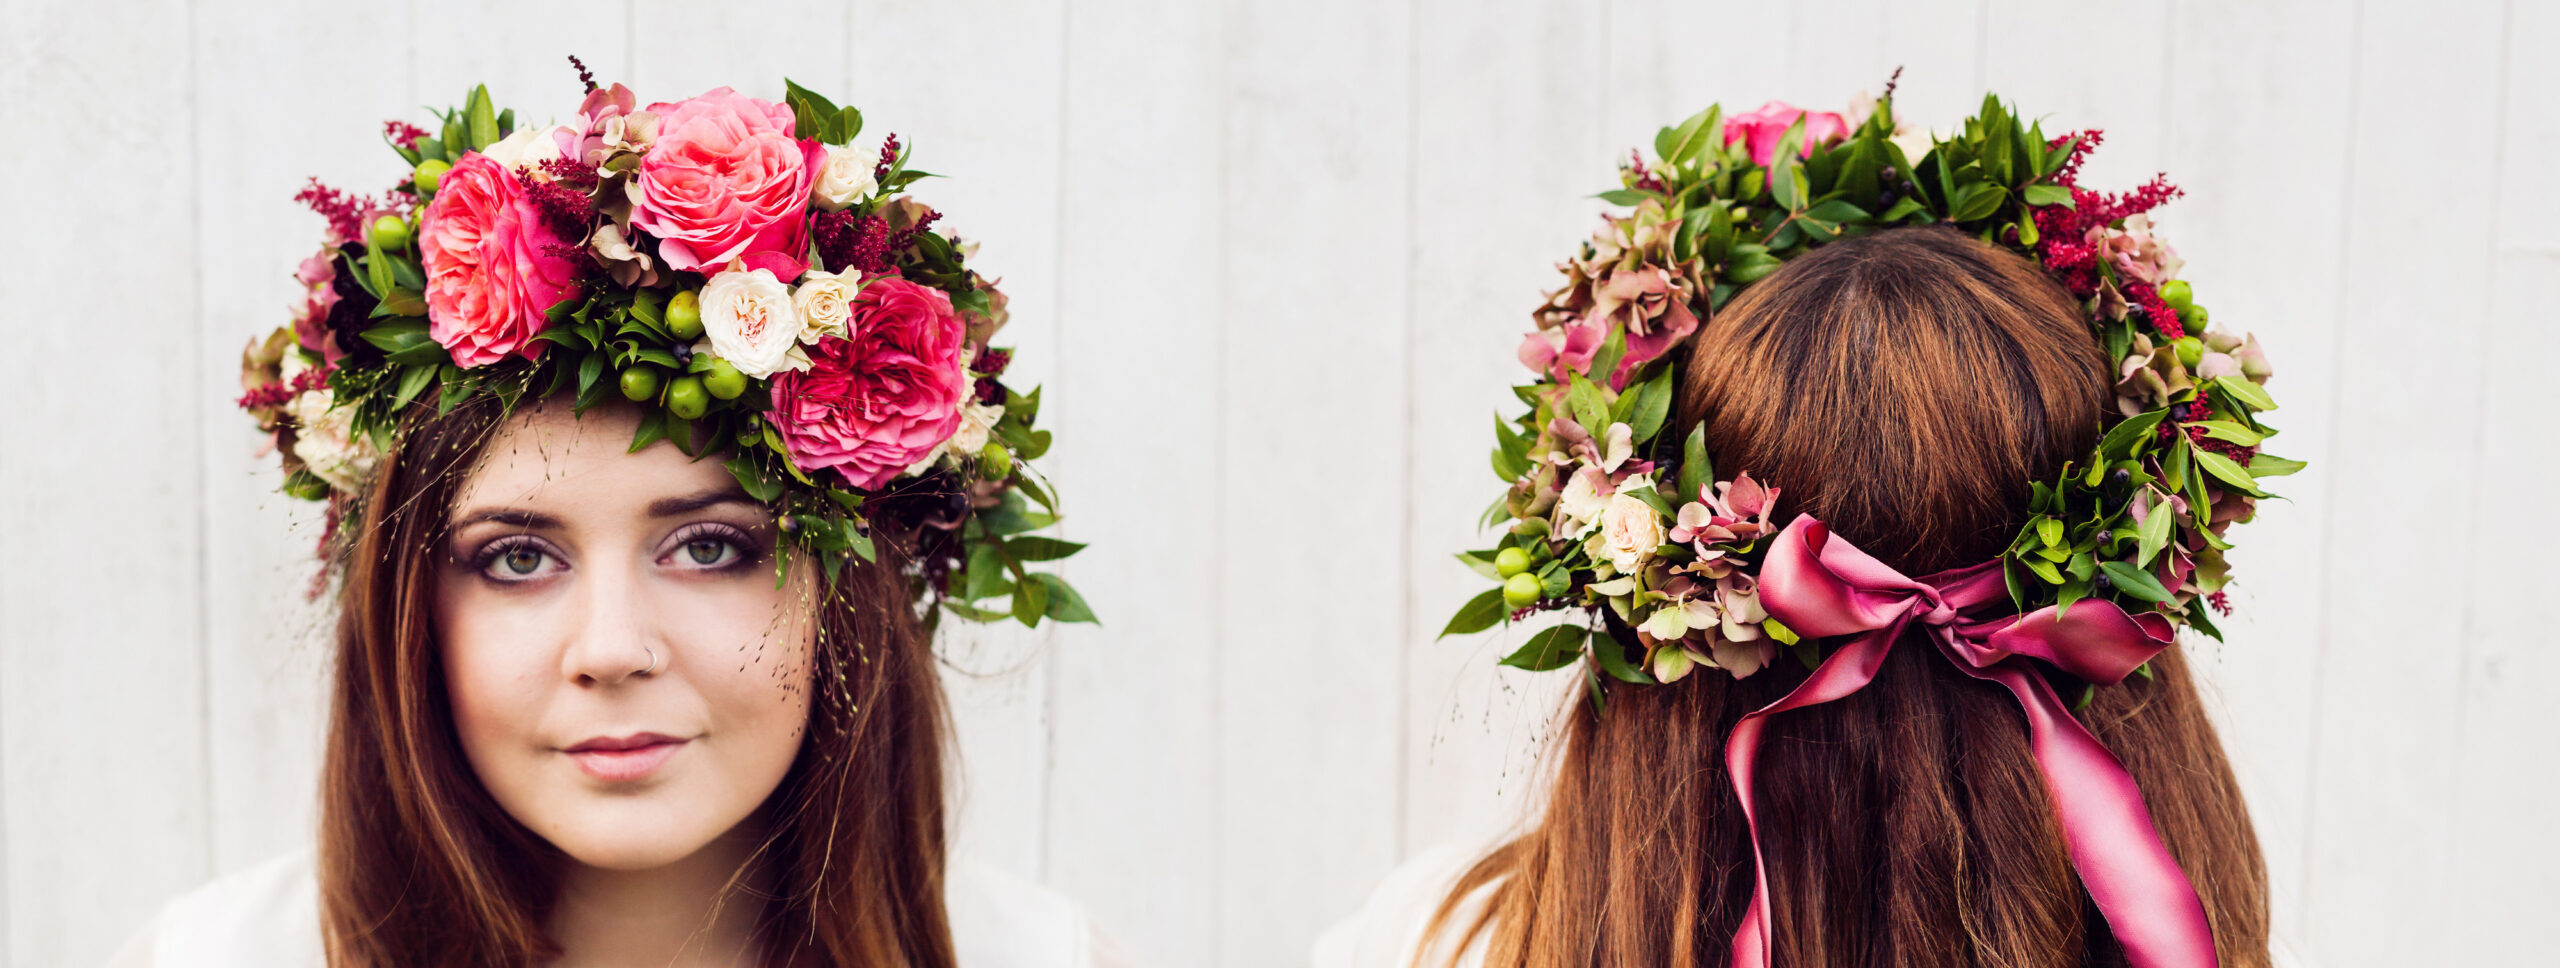 Gathered Style - Bloom Room Studio LTD - Large Bridal Flower Crown - Photo Credit Katie Spicer